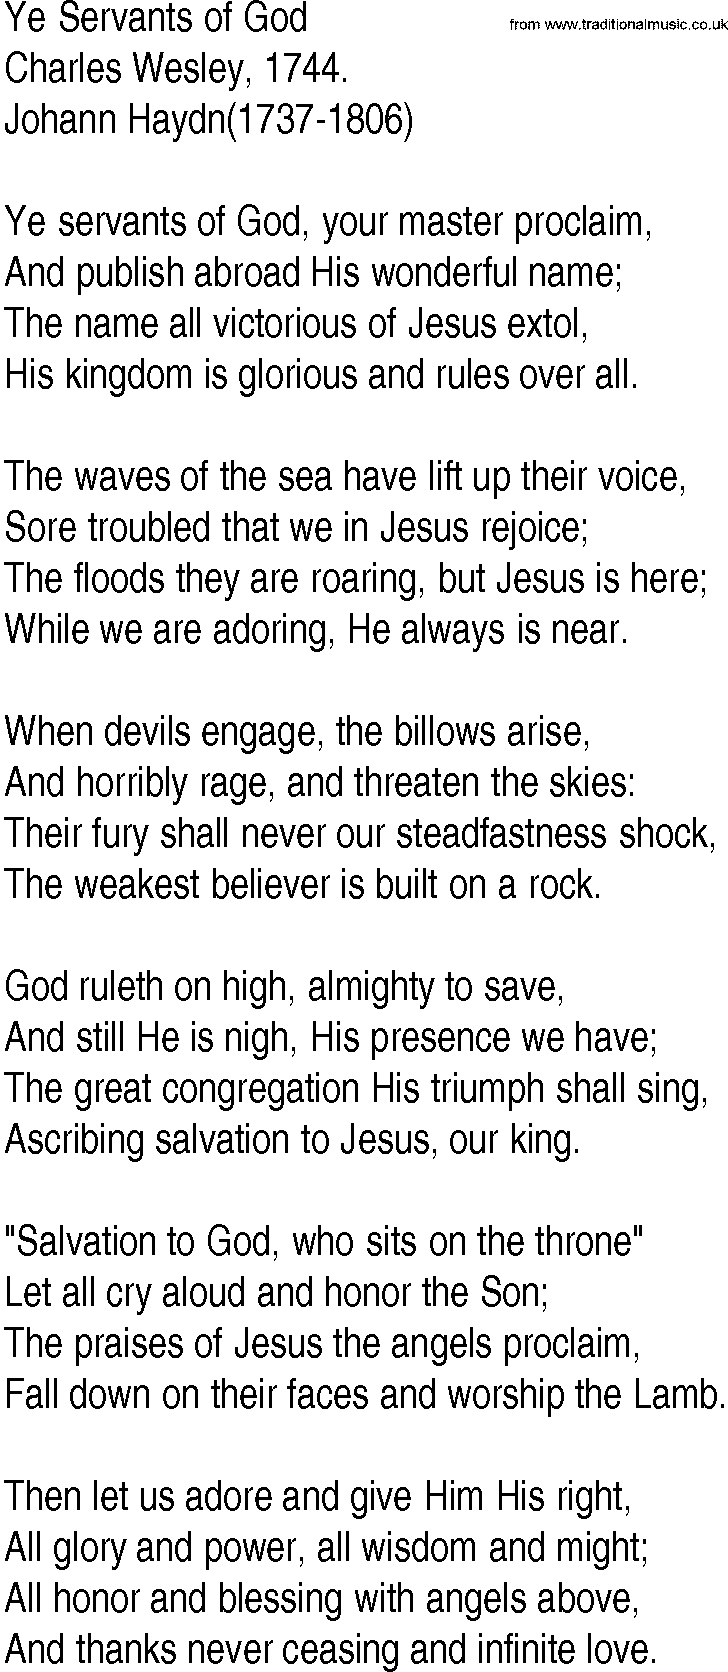 Hymn and Gospel Song: Ye Servants of God by Charles Wesley lyrics